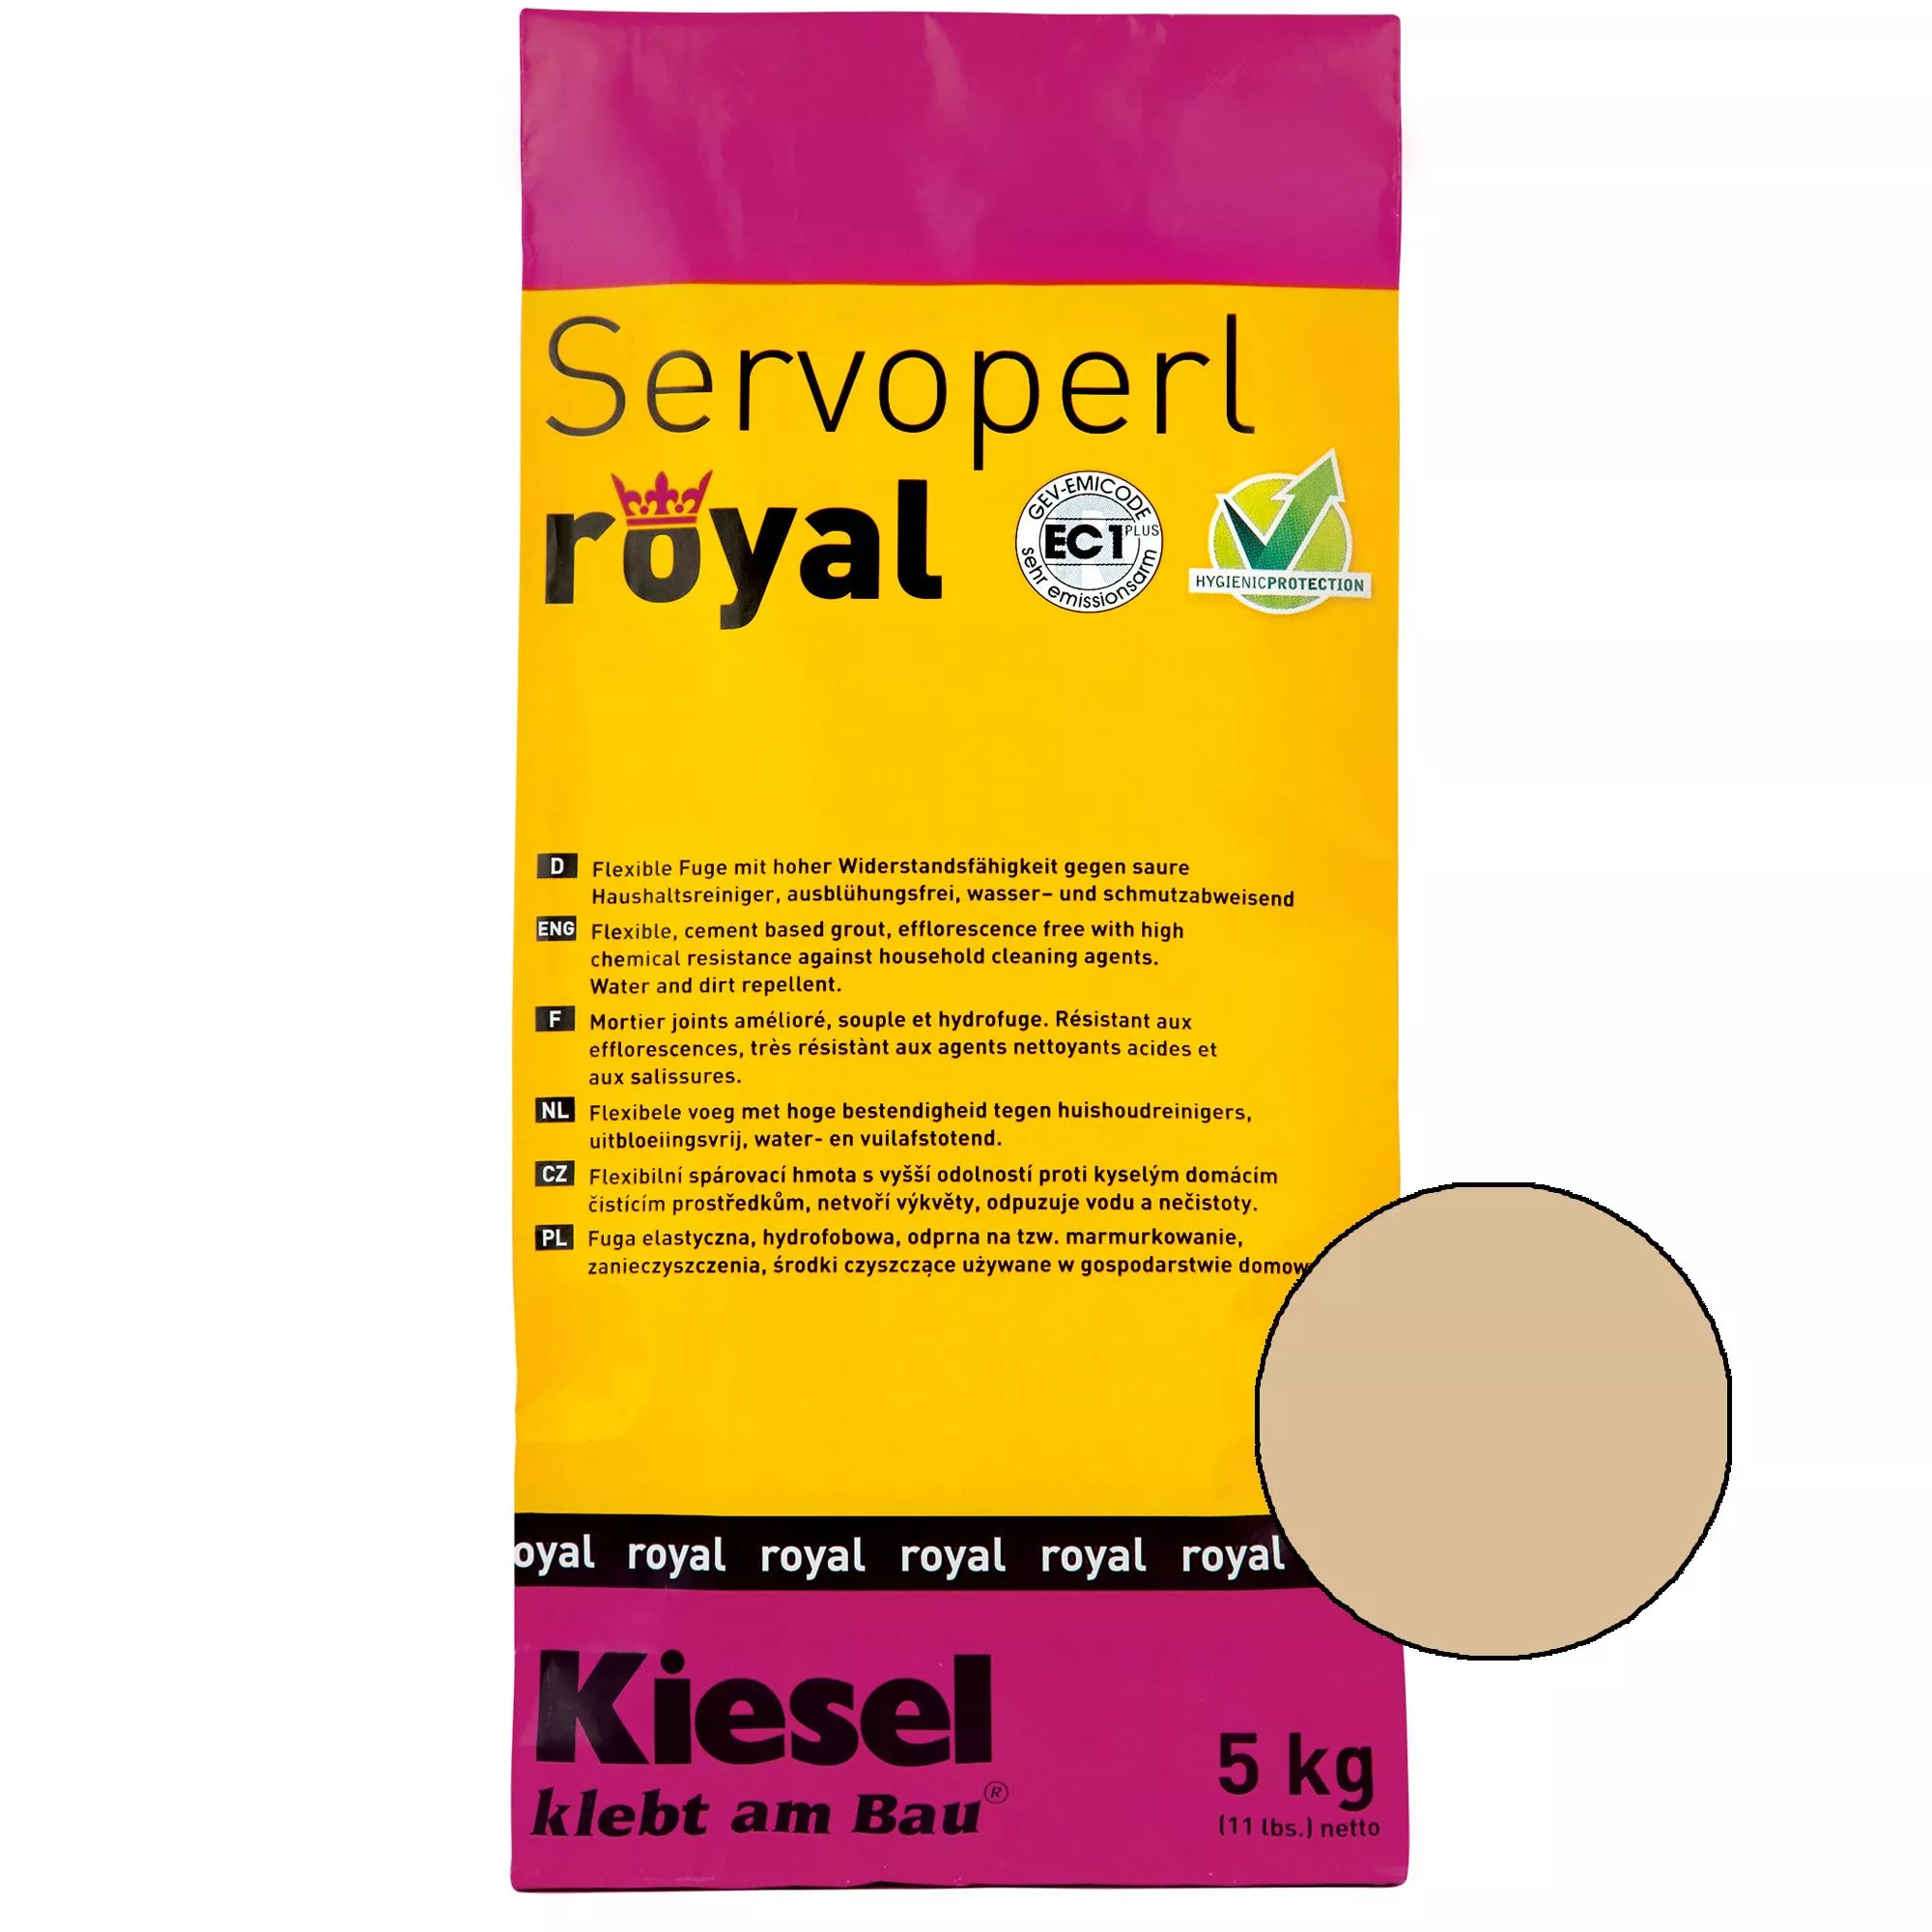 Kiesel Servoperl royal - fuga keverék - 5 kg Safari Sand